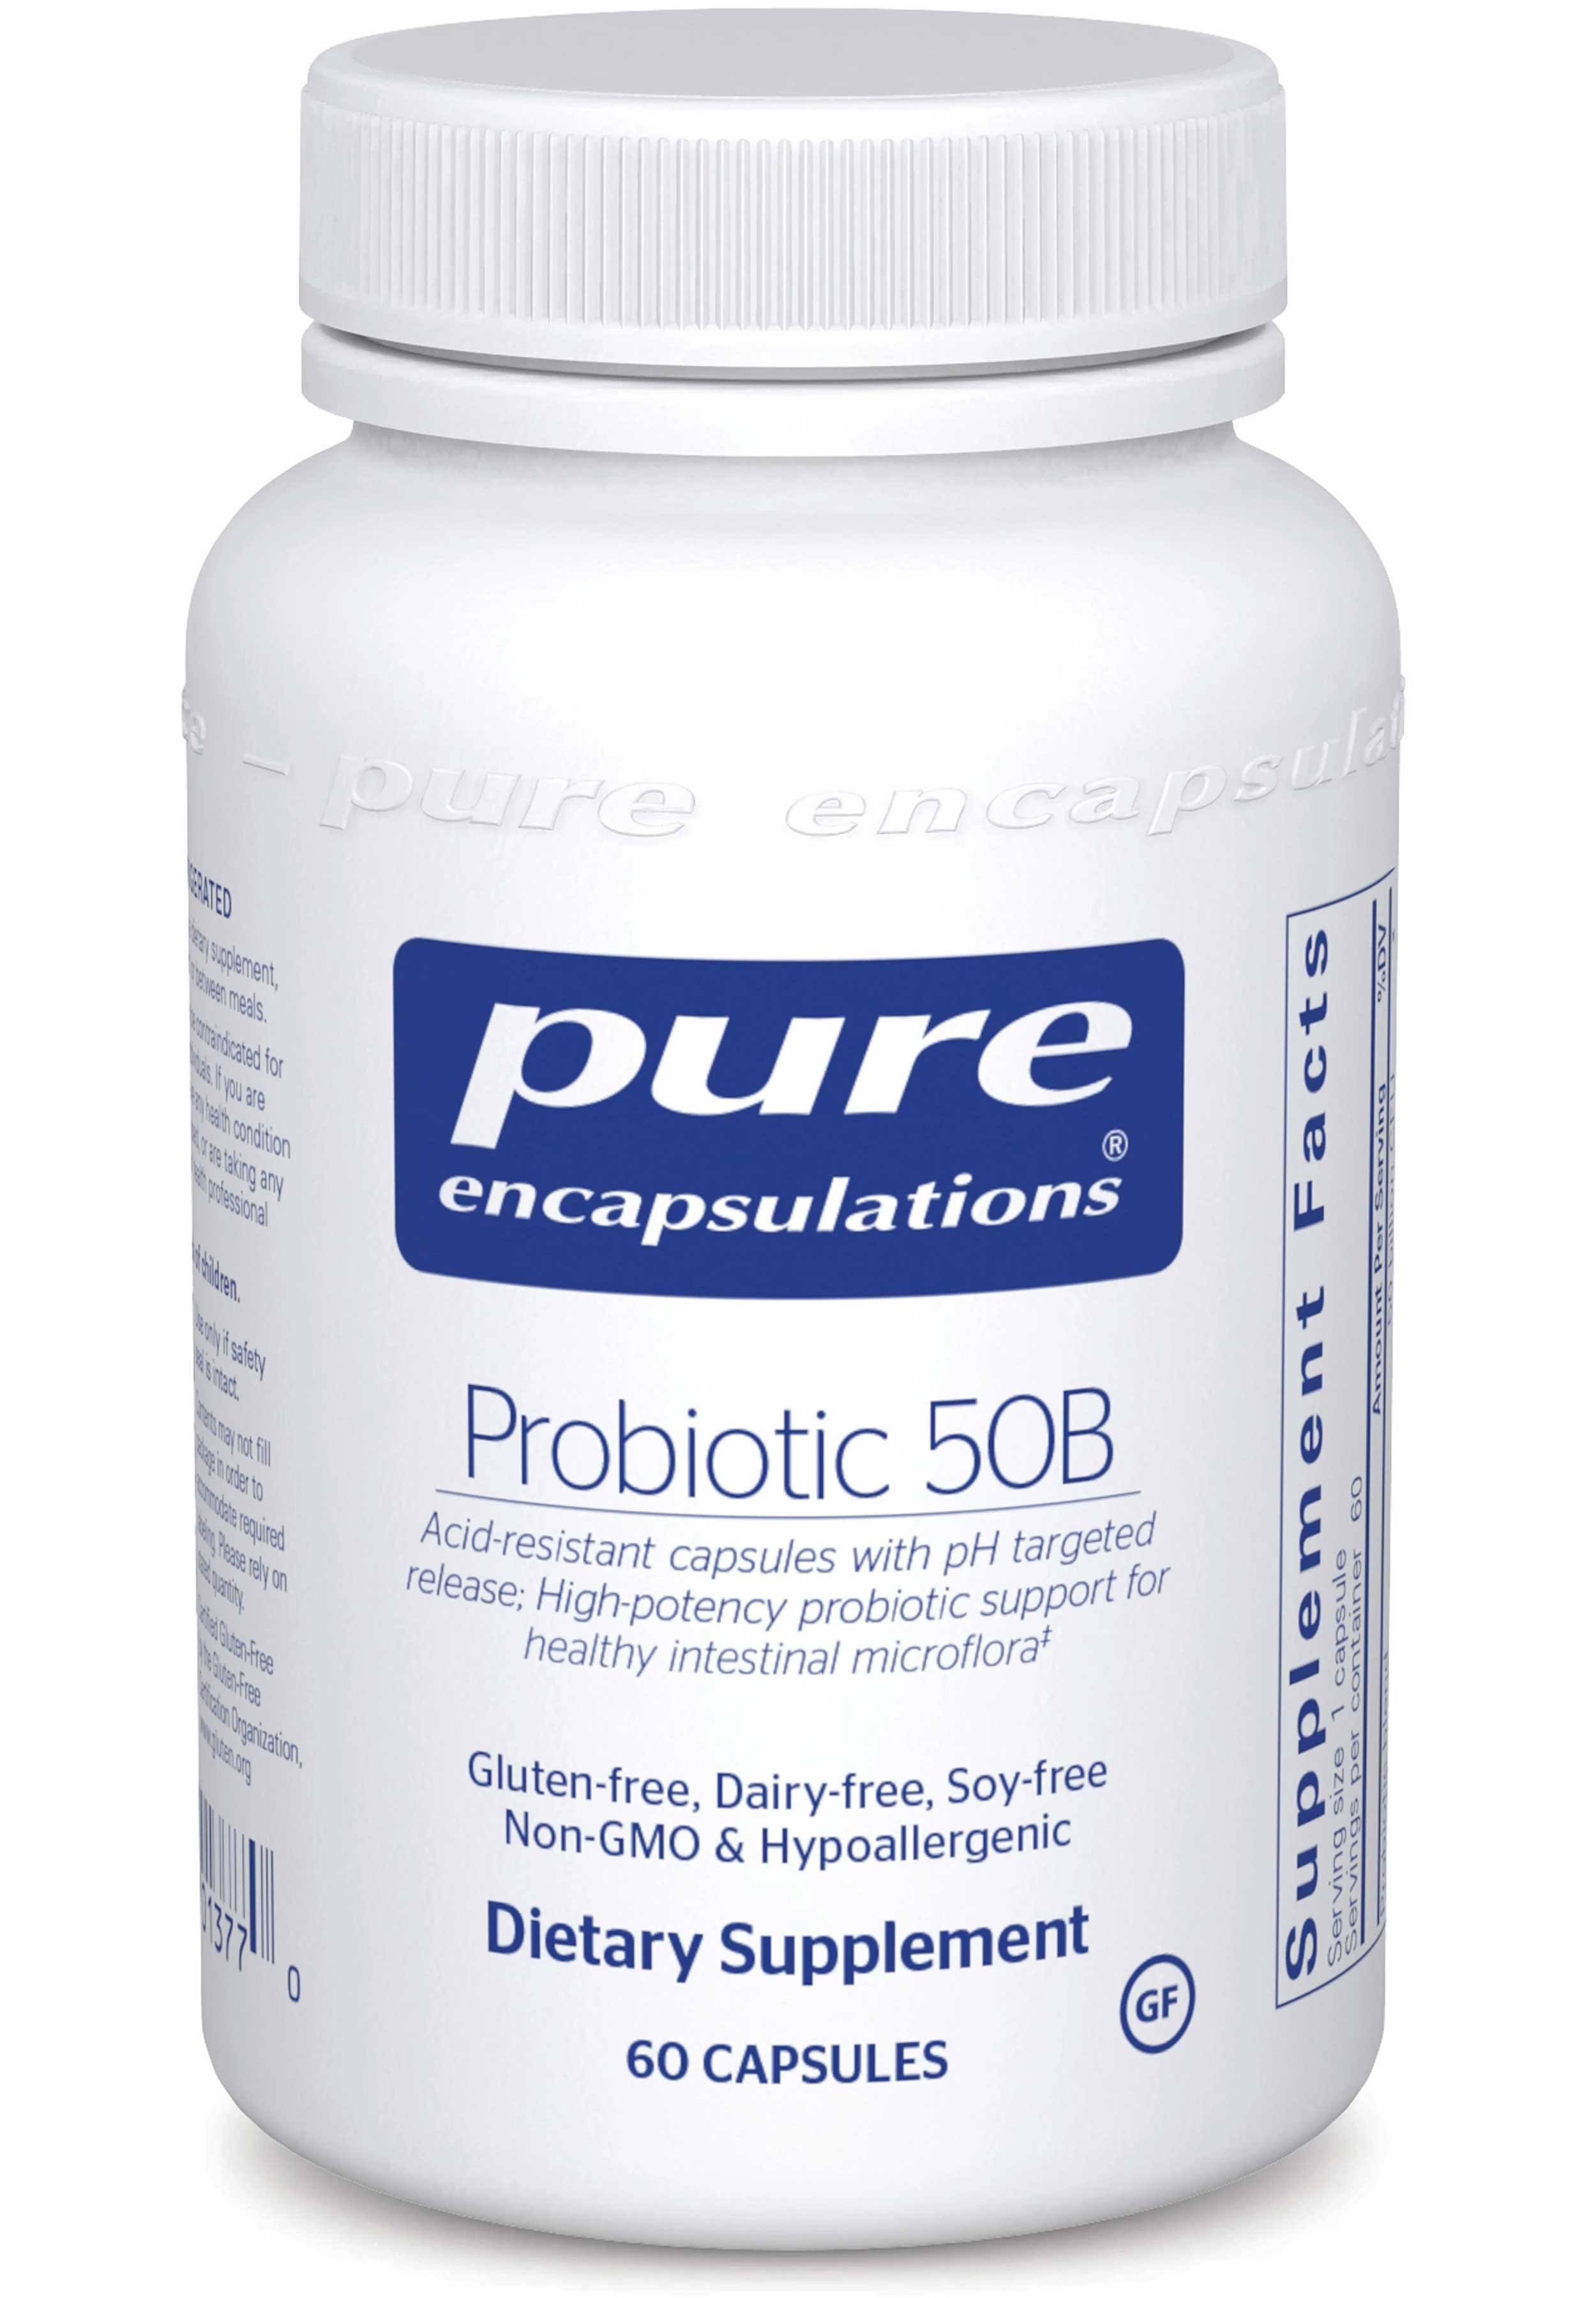 Pure Encapsulations Probiotic 50B Acid-Resistant Capsules to Promote Digestive and Immune Health - 60 Capsules